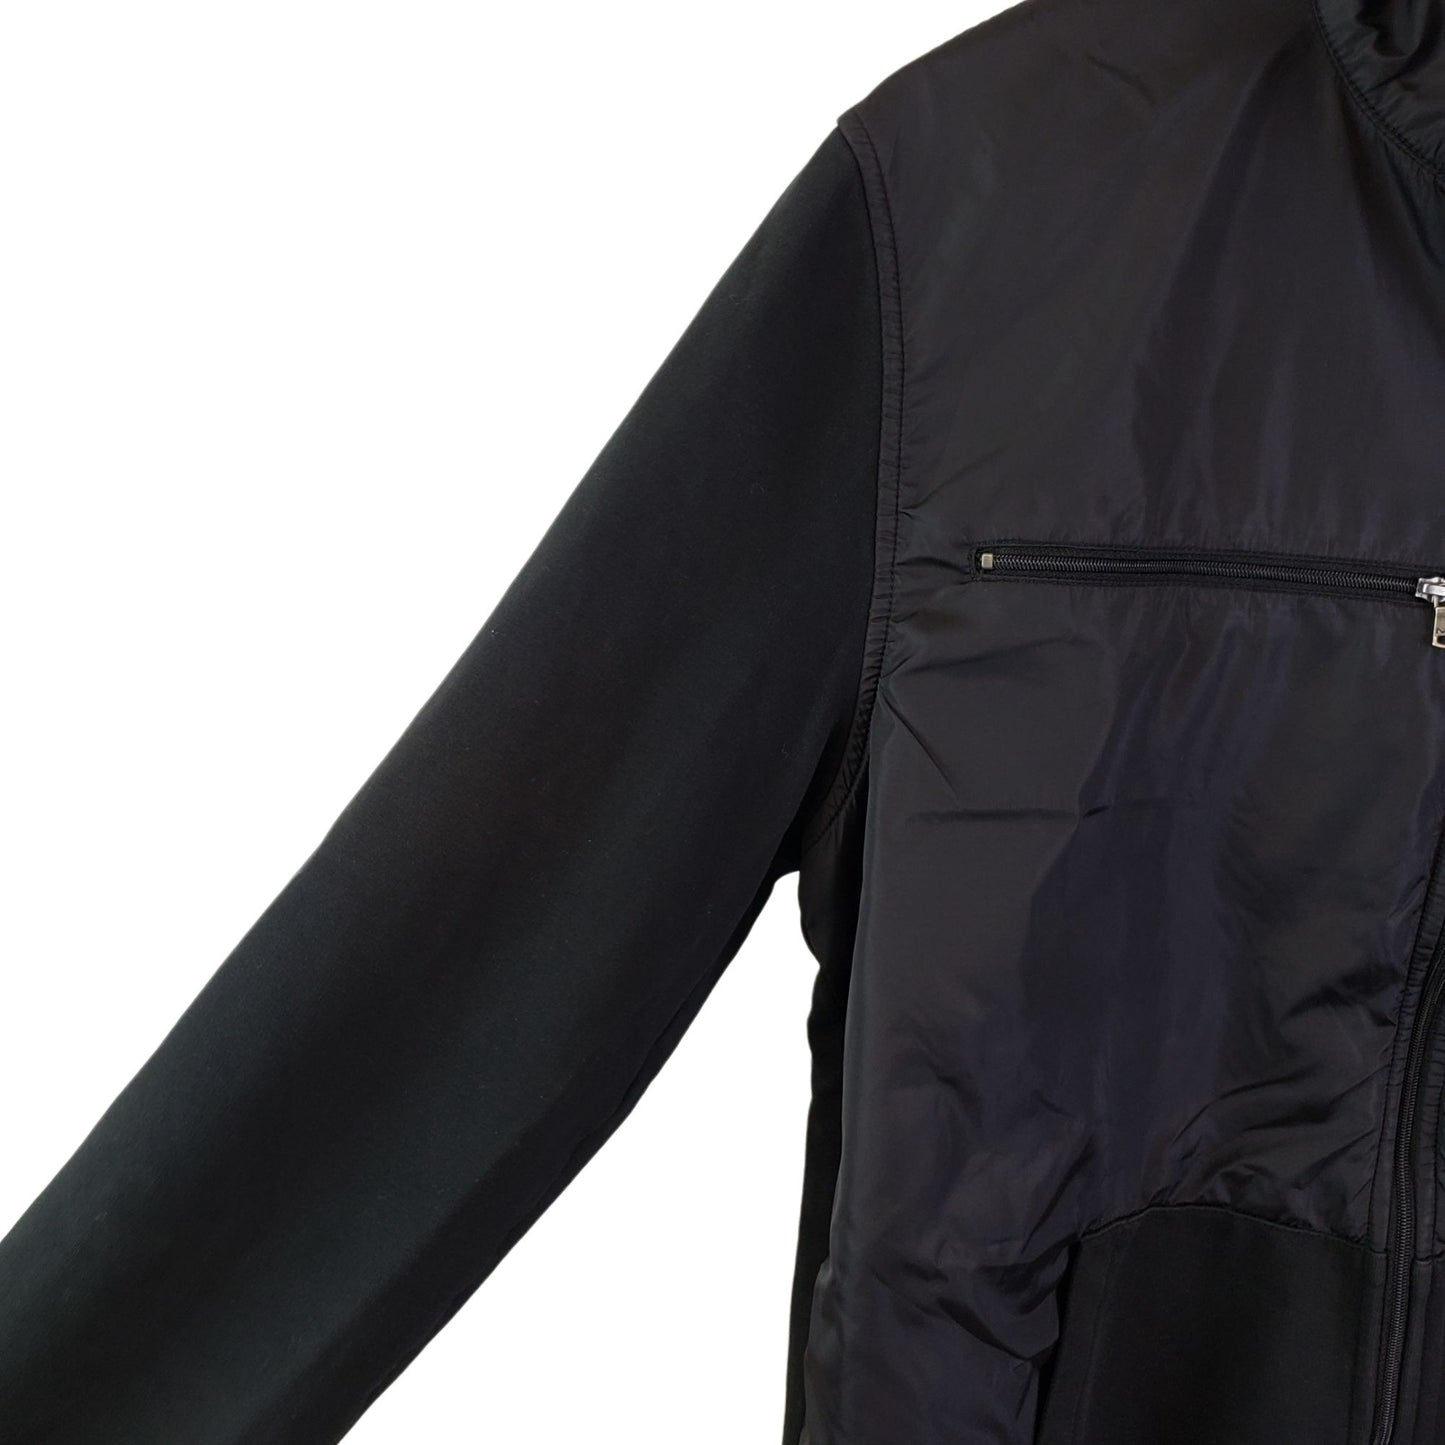 Michael Kors Mixed Media Zip Front Bomber Jacket Size Medium